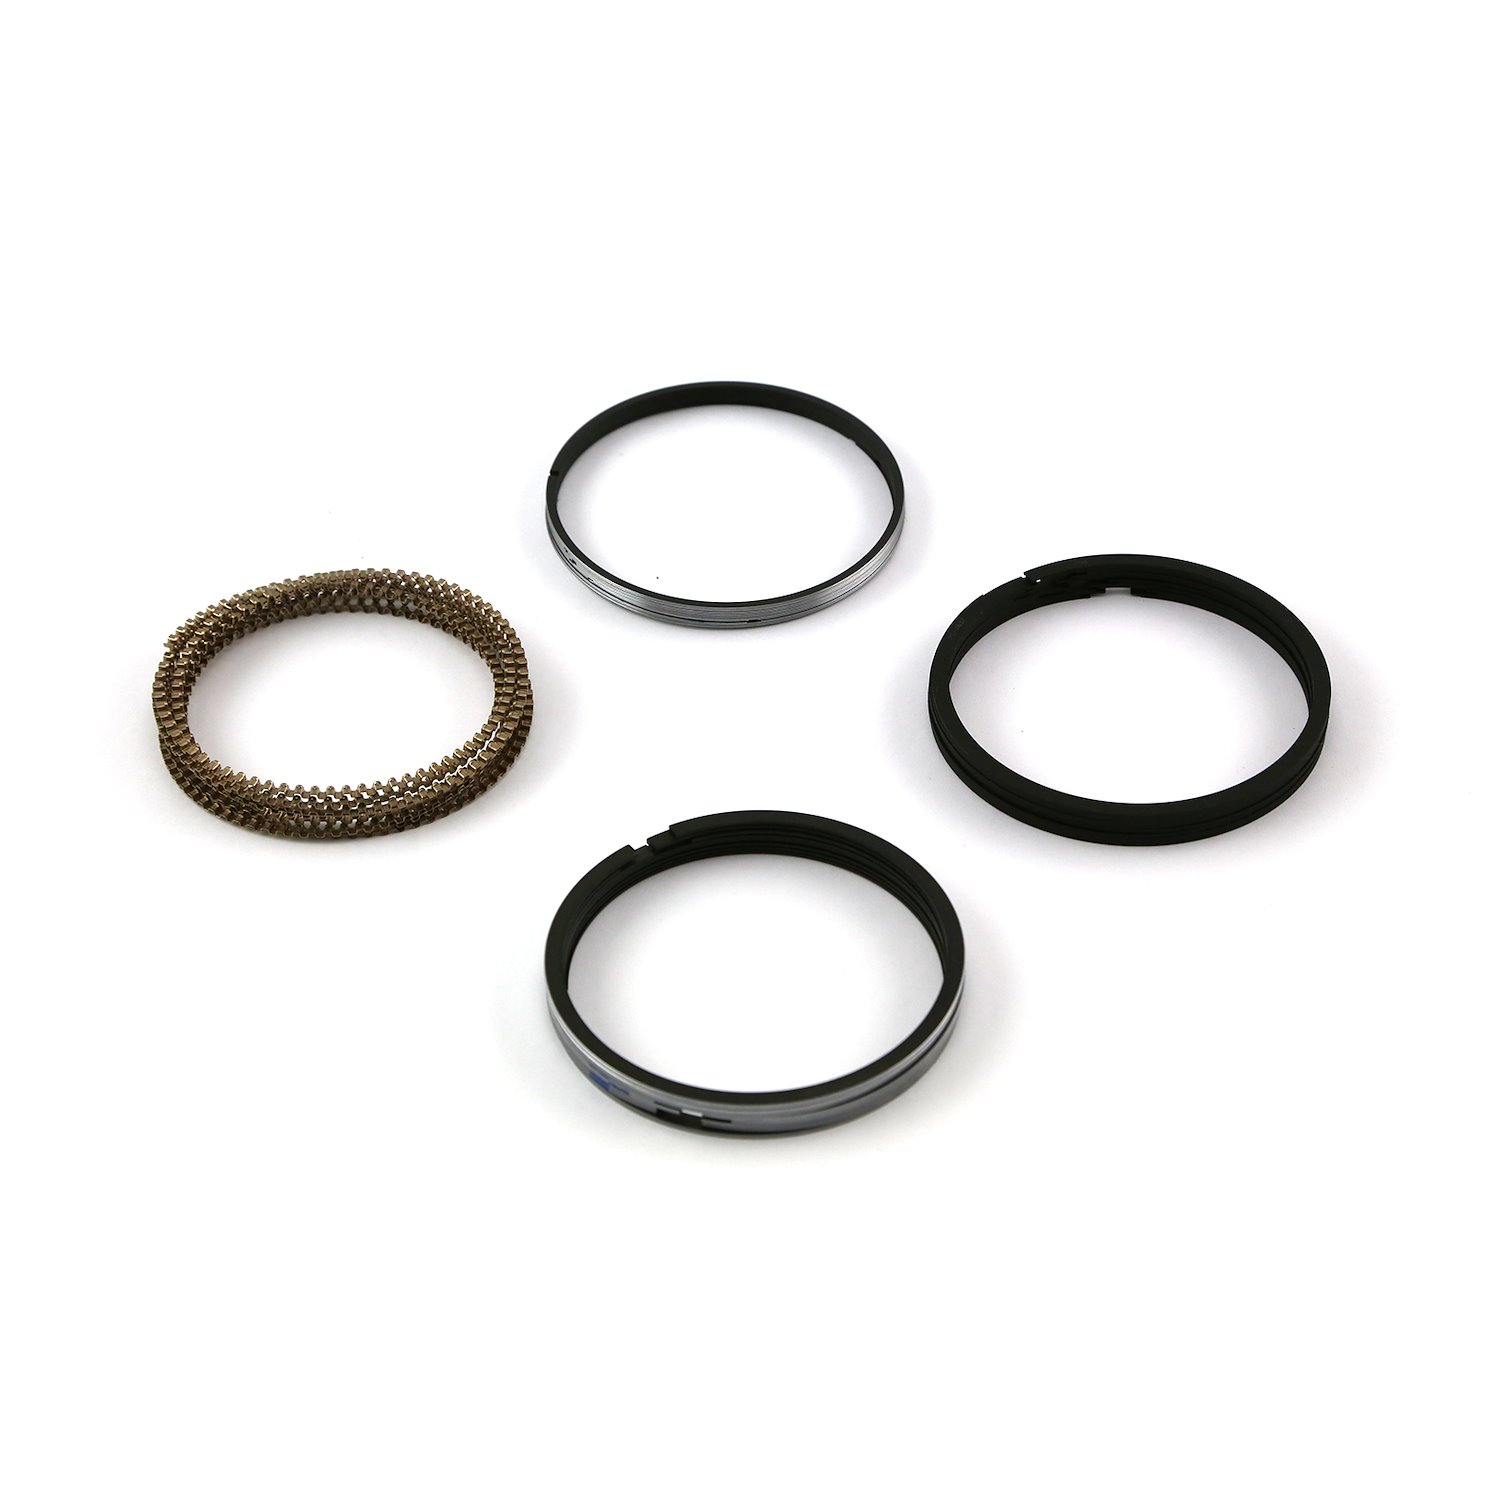 Piston Ring Set 4.030 Bore [1.5 mm, 1.5 mm, 3.0 mm] Zero Gap